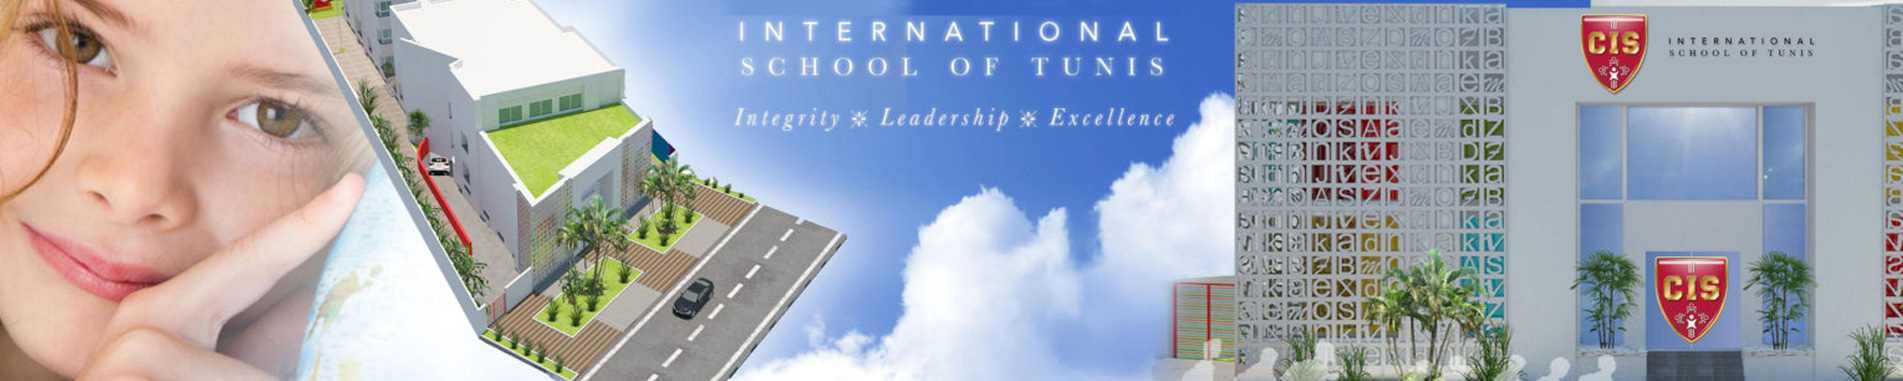 CIS International School of Tunis